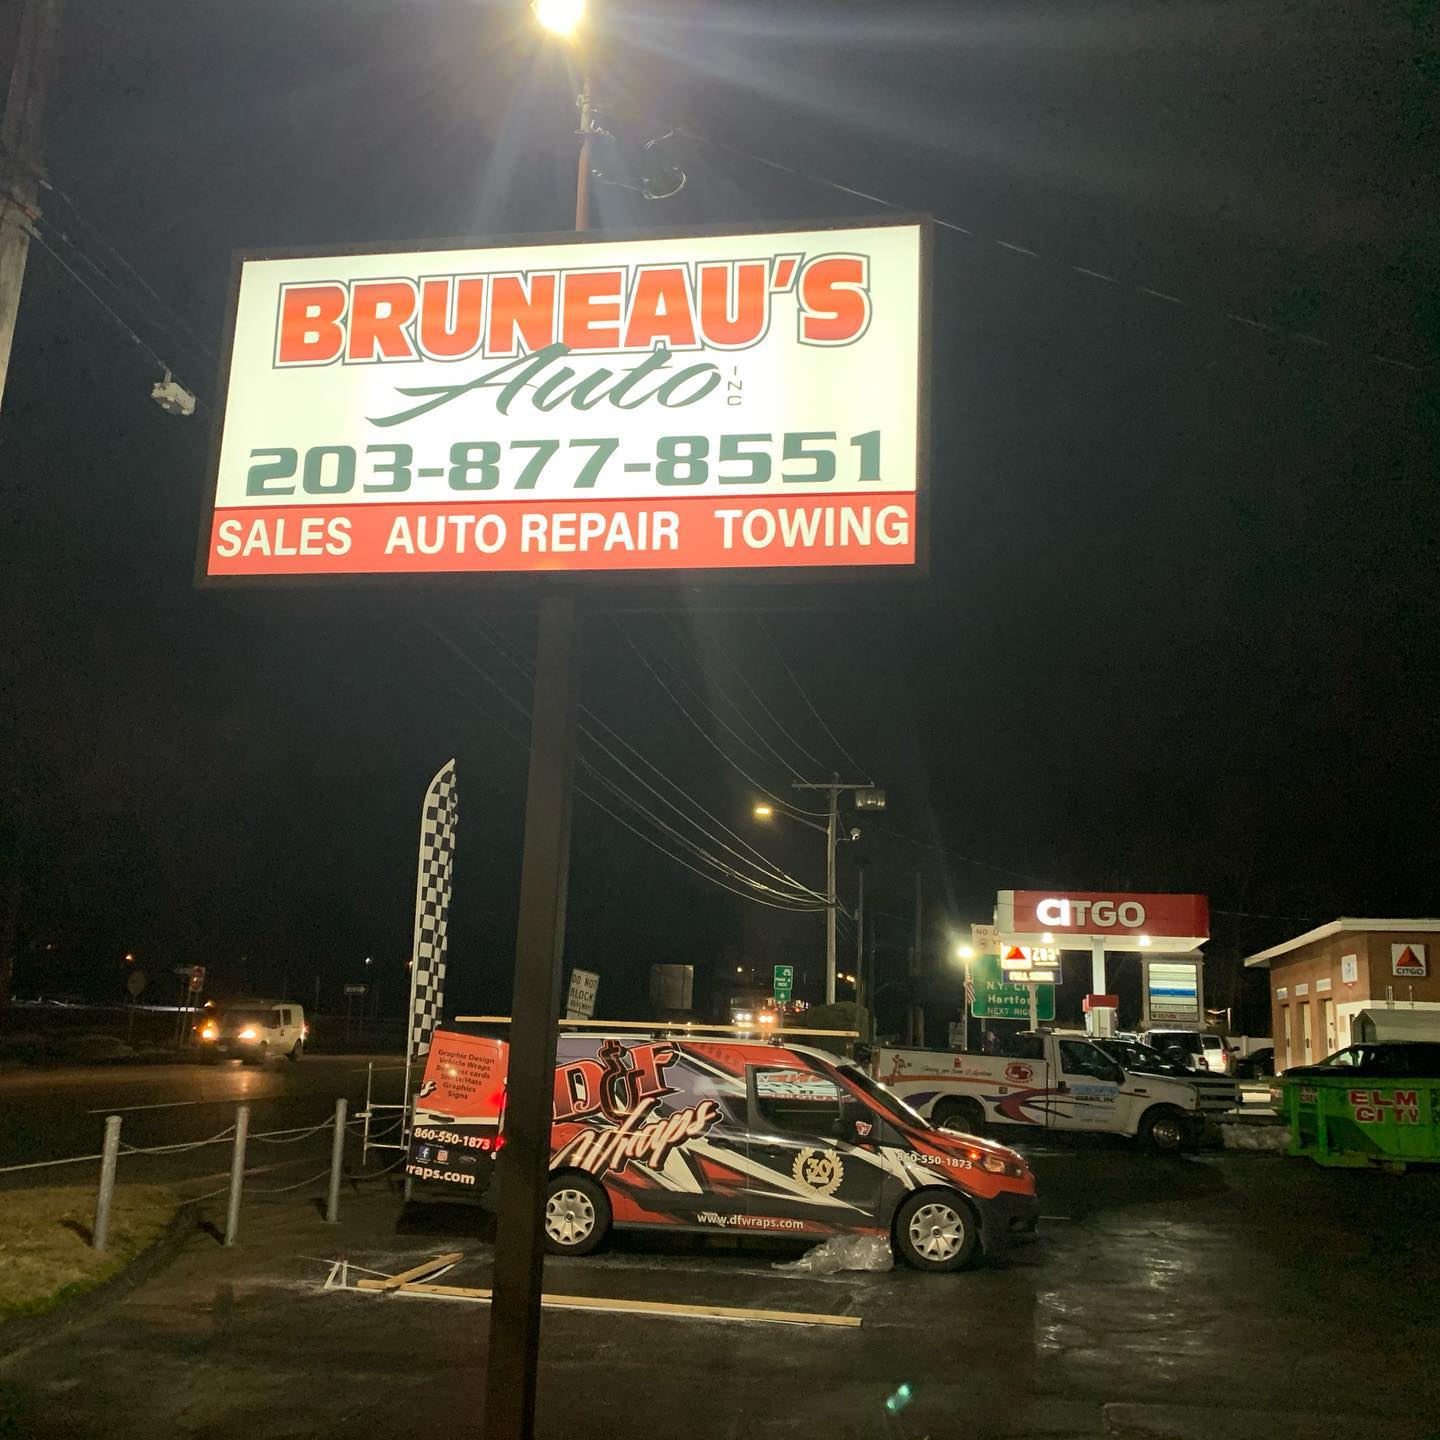 Bruneau's Auto Sign